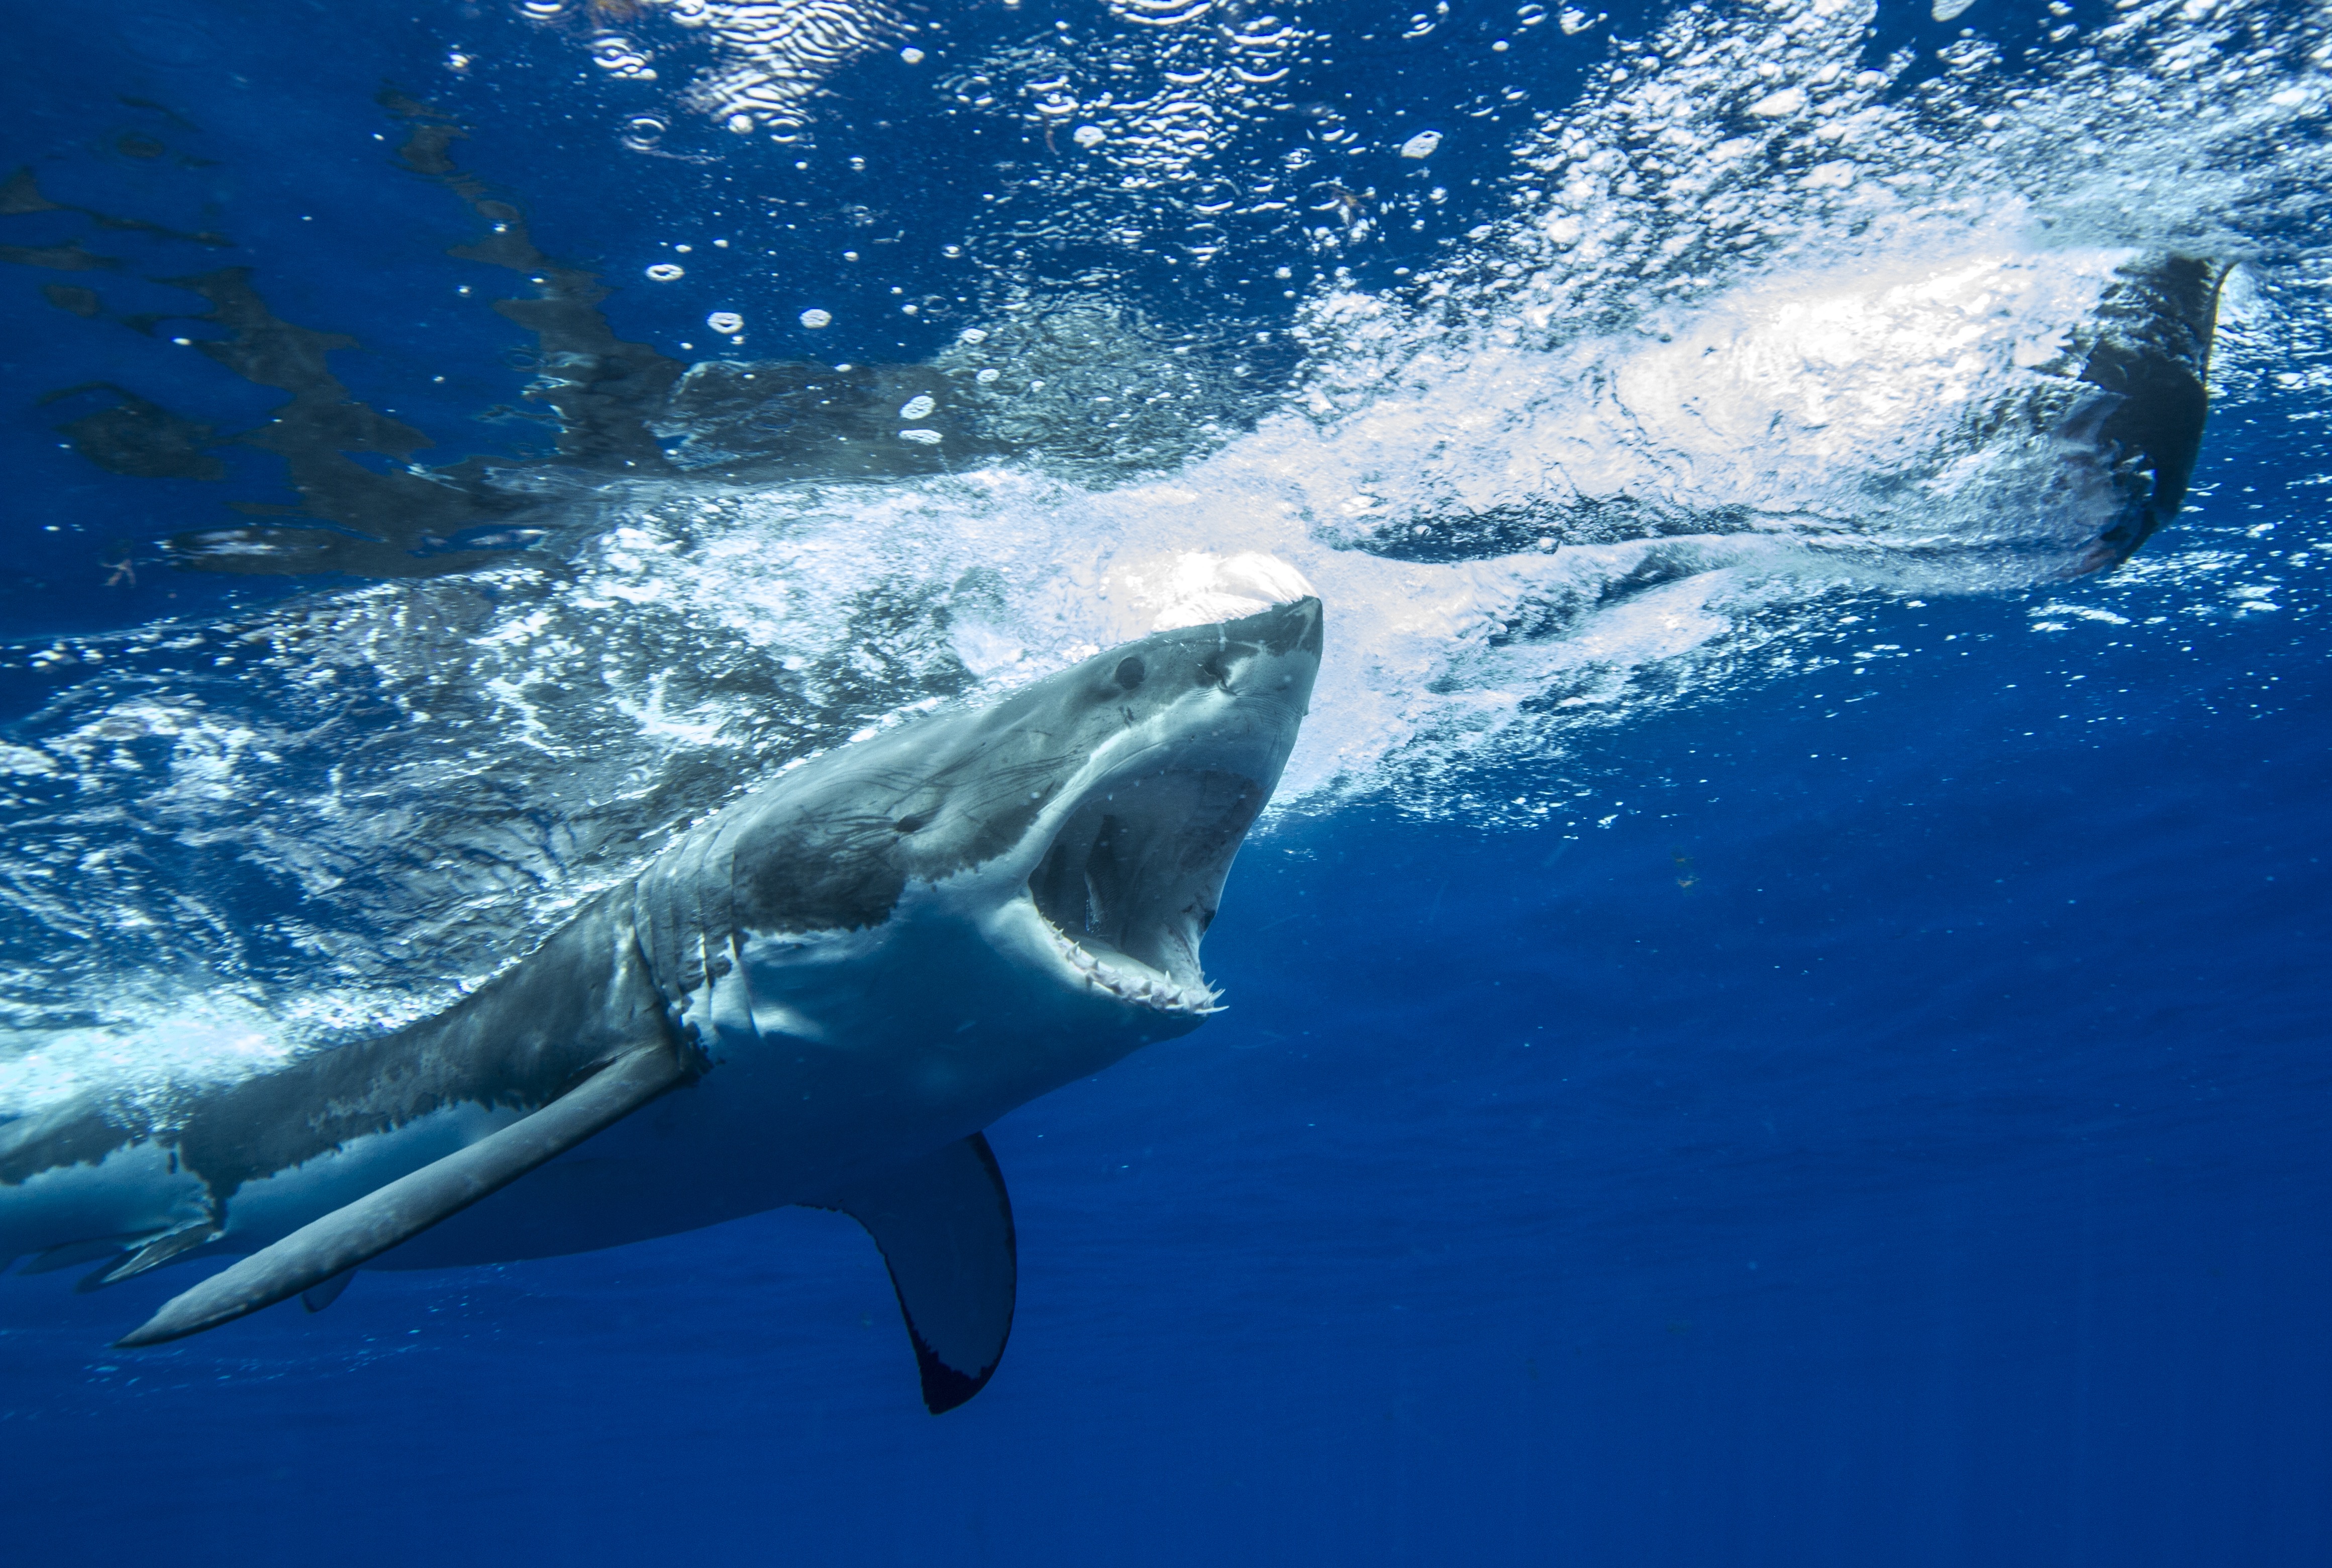 Shark chasing prey.